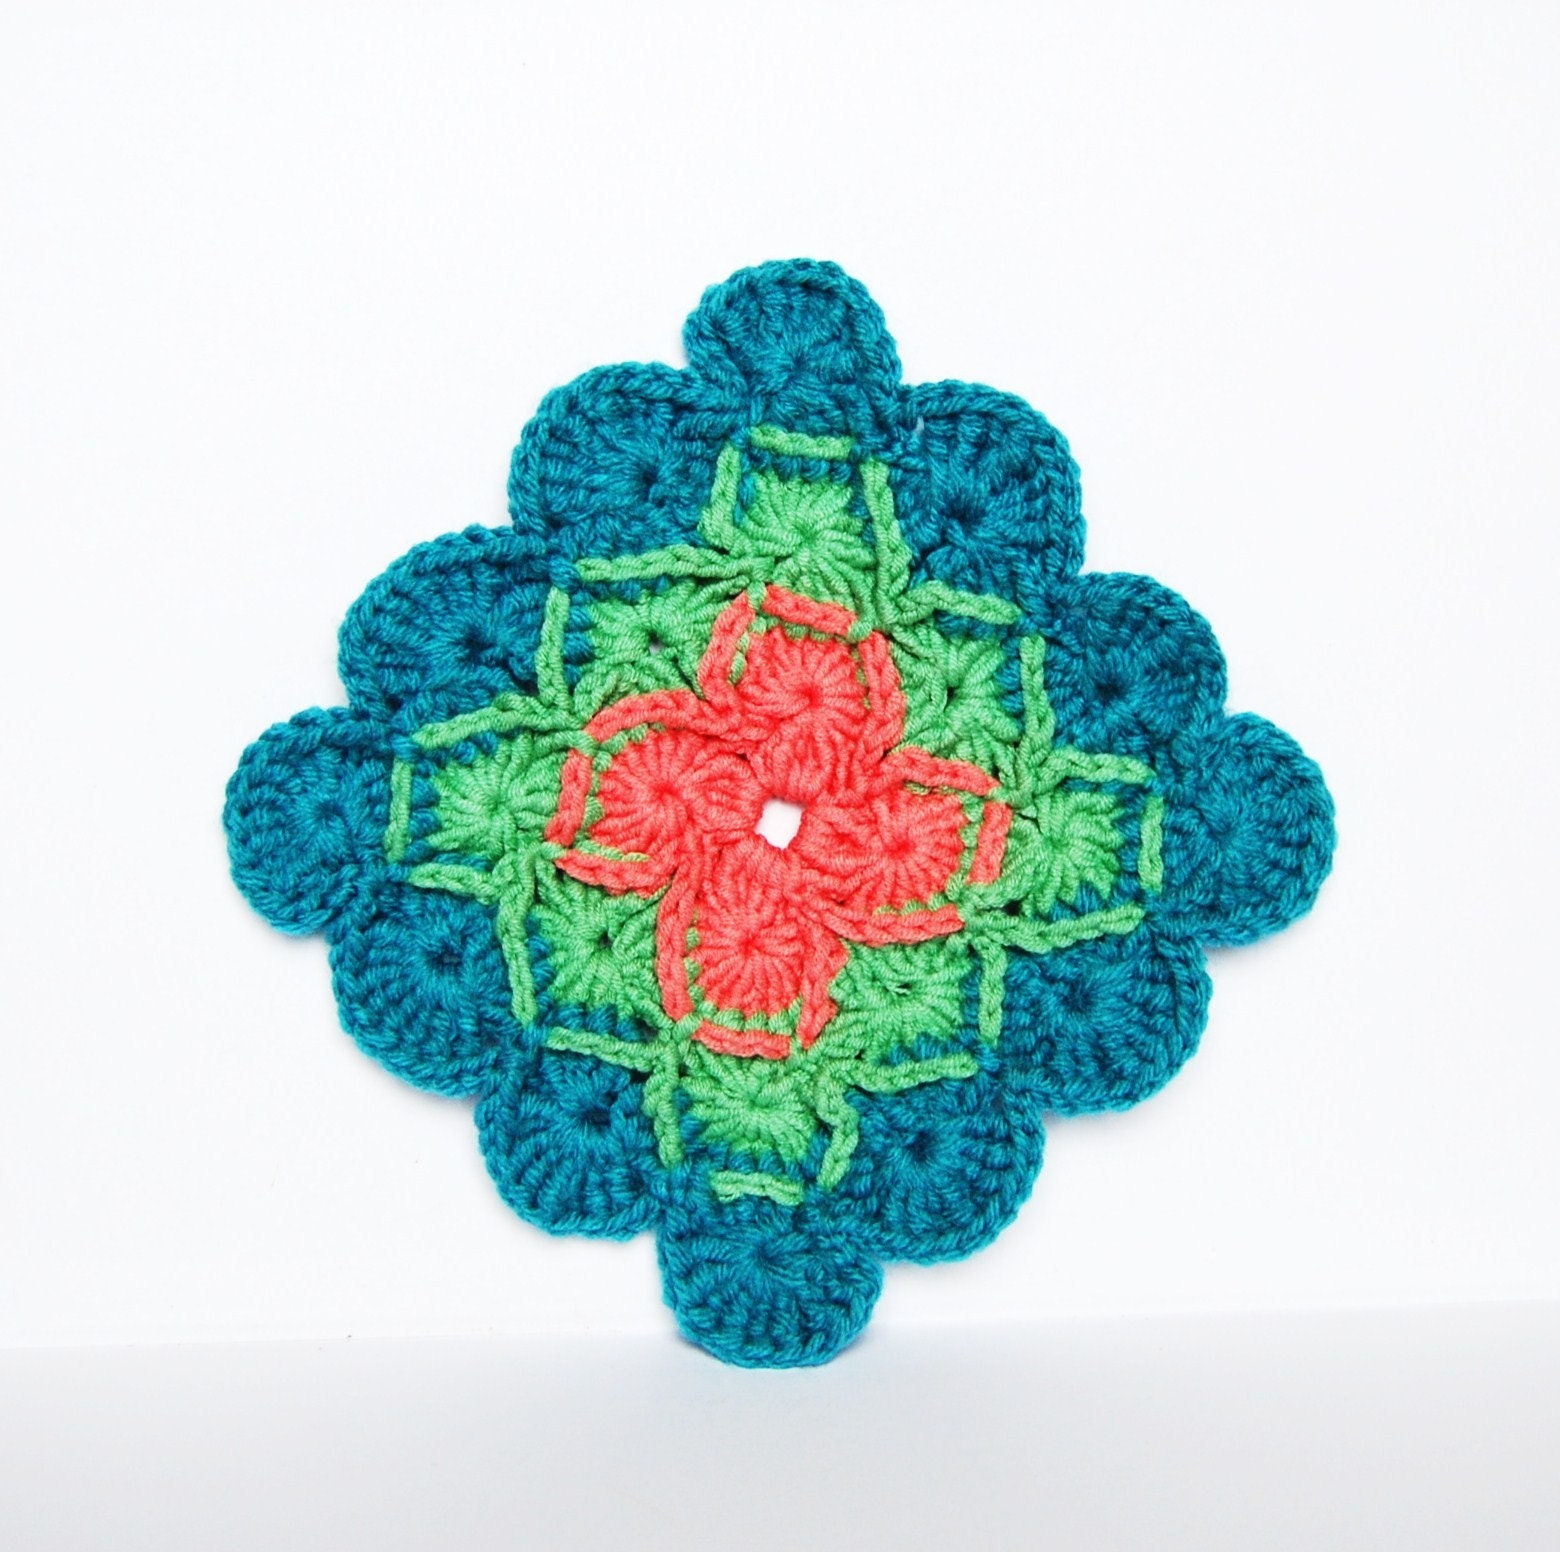 Crochet Potholders - YouTube